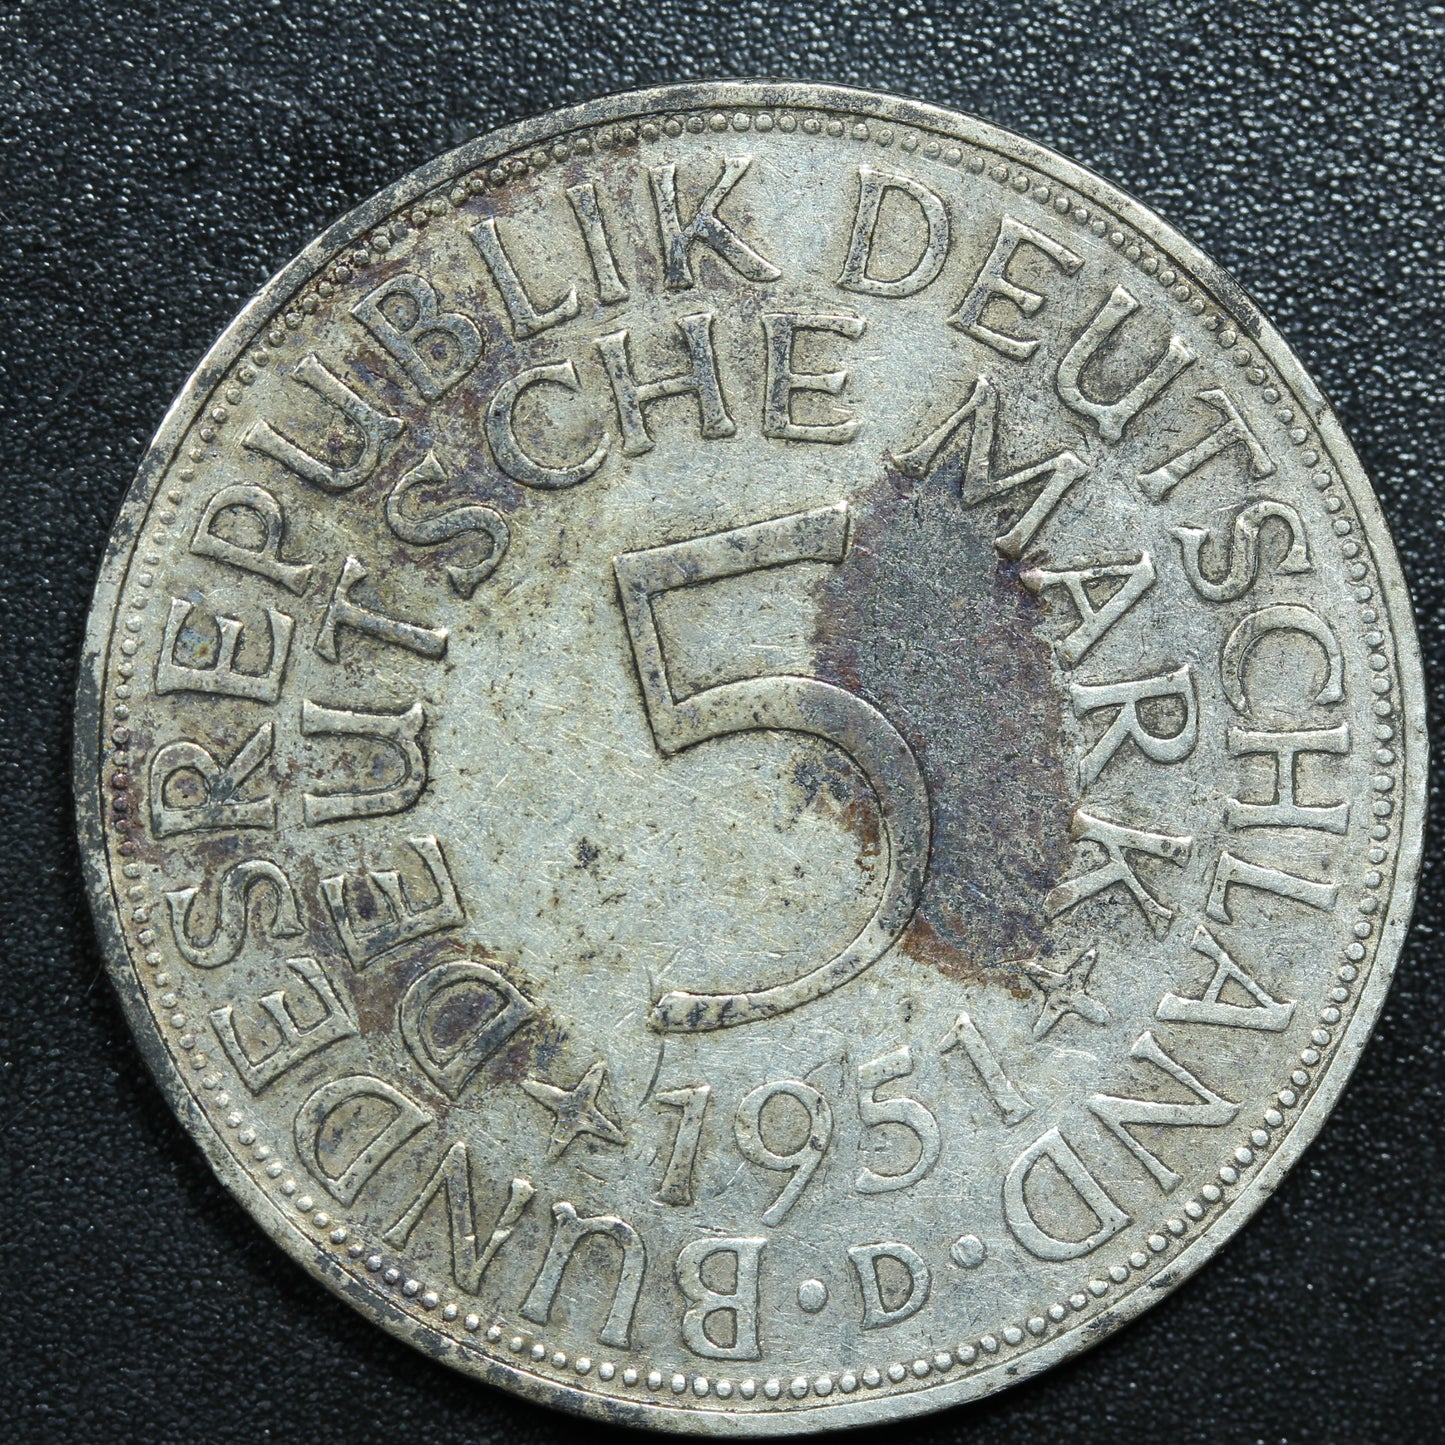 1951 D German 5 Funf Mark Silver Coin - KM# 112